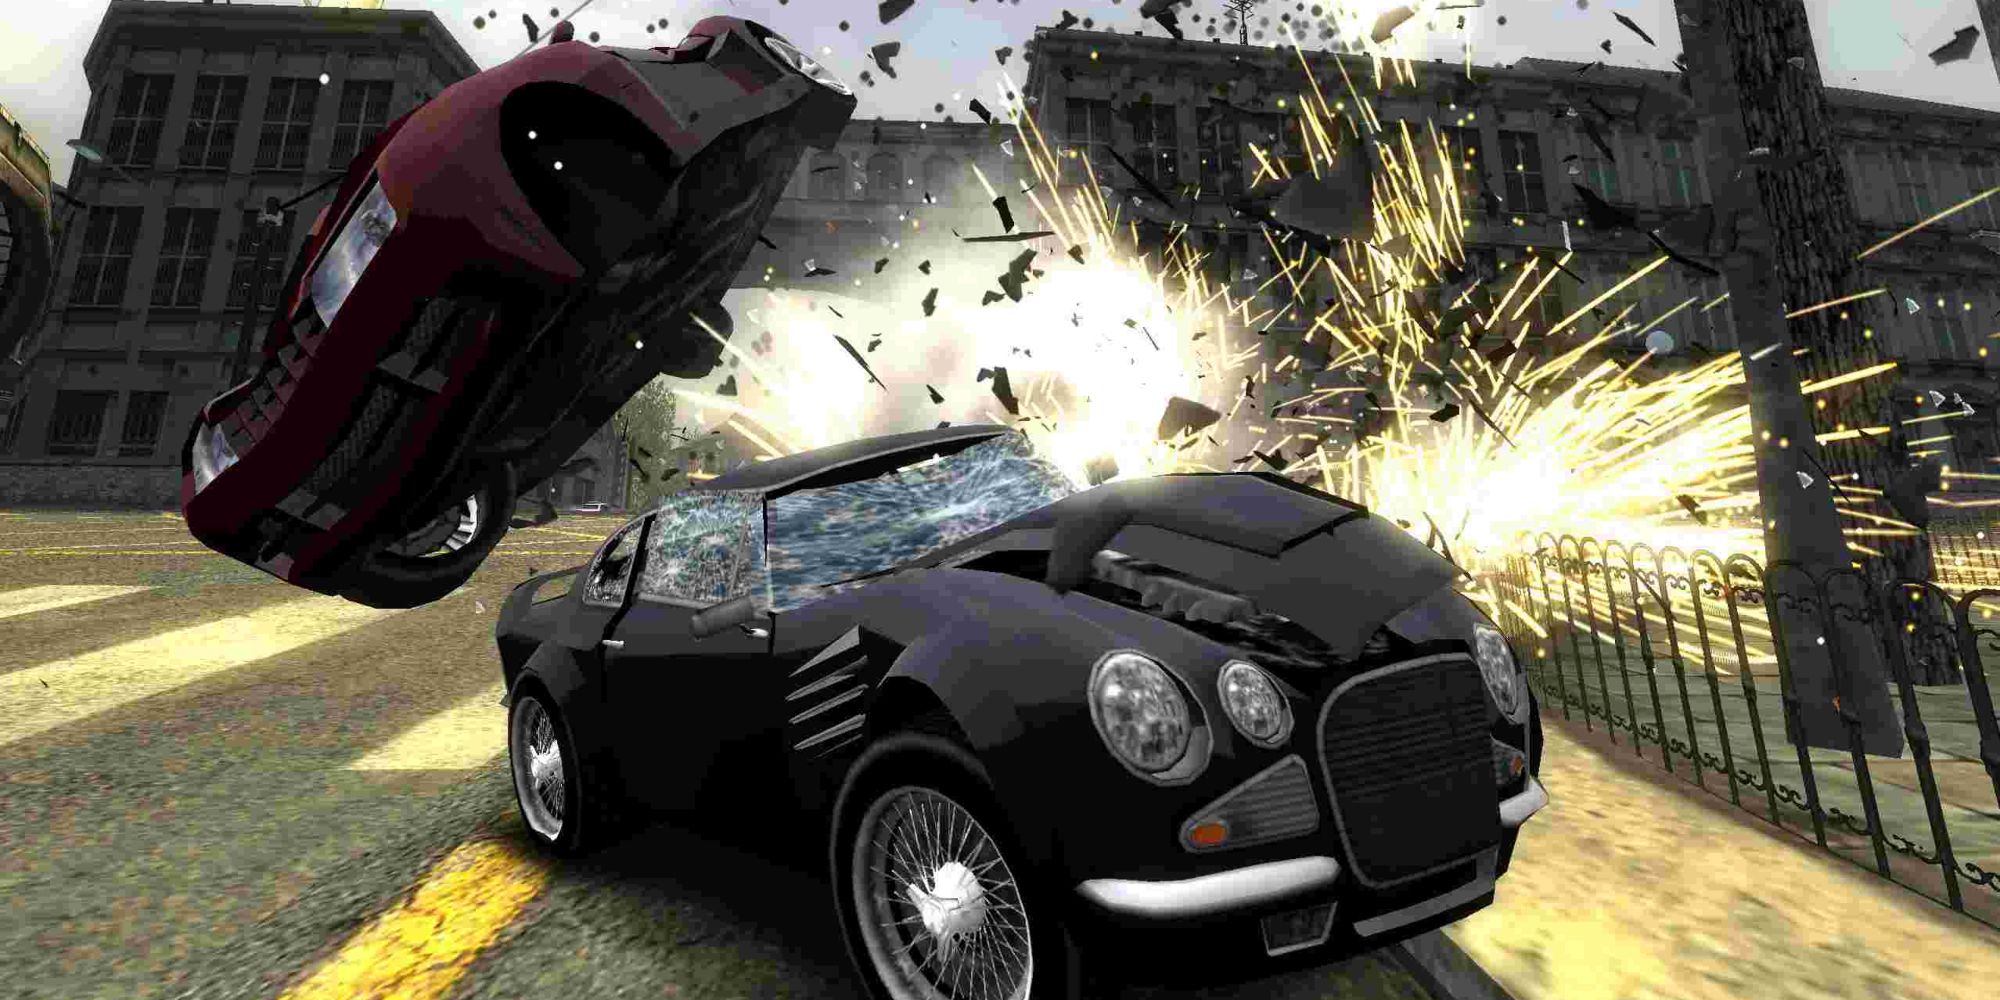 Burnout Dominator Screenshot Two Cars Getting Destroyed